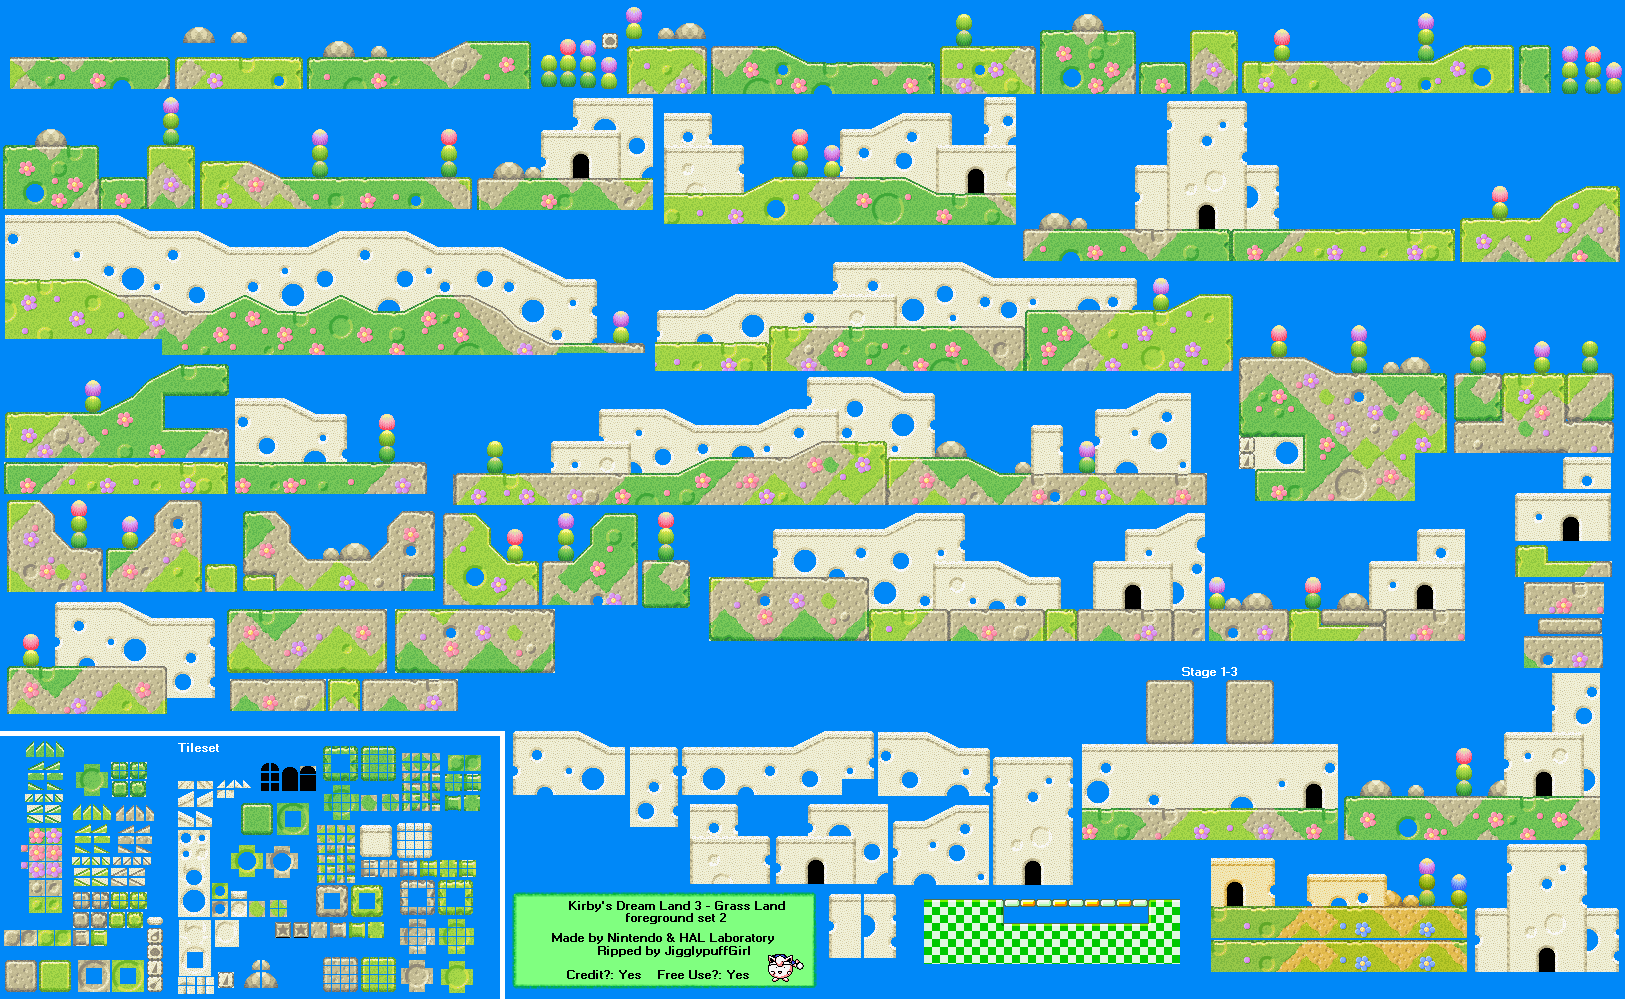 Kirby's Dream Land 3 - Grass Land Foreground Set 2